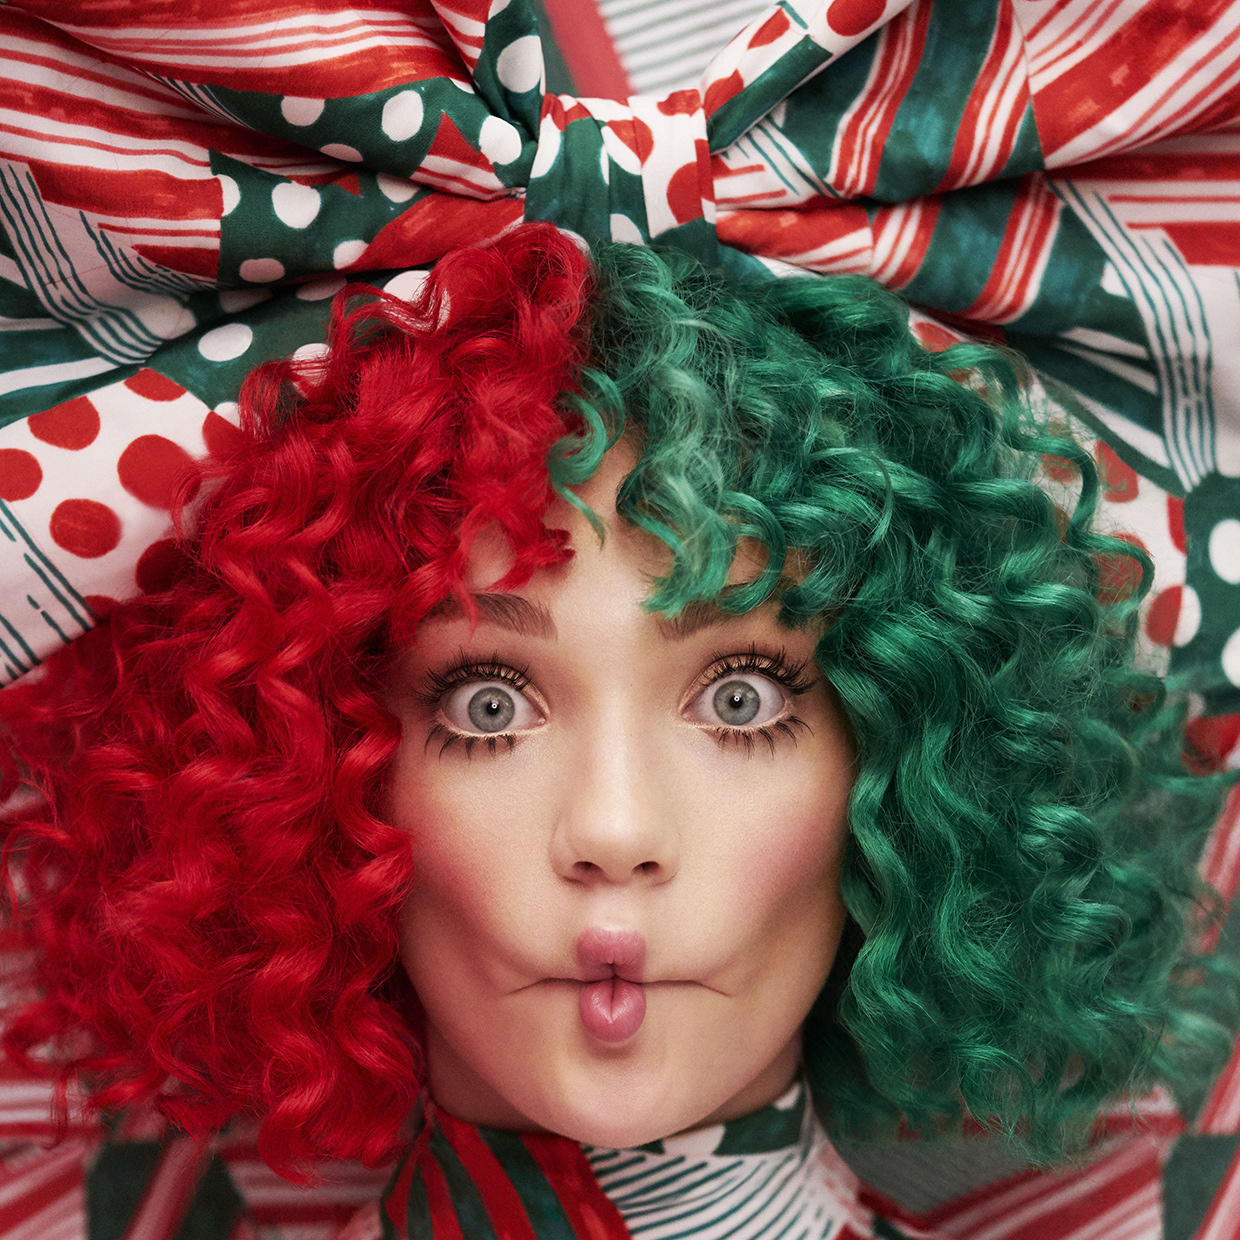 Thank God Sia is doing Christmas music her way